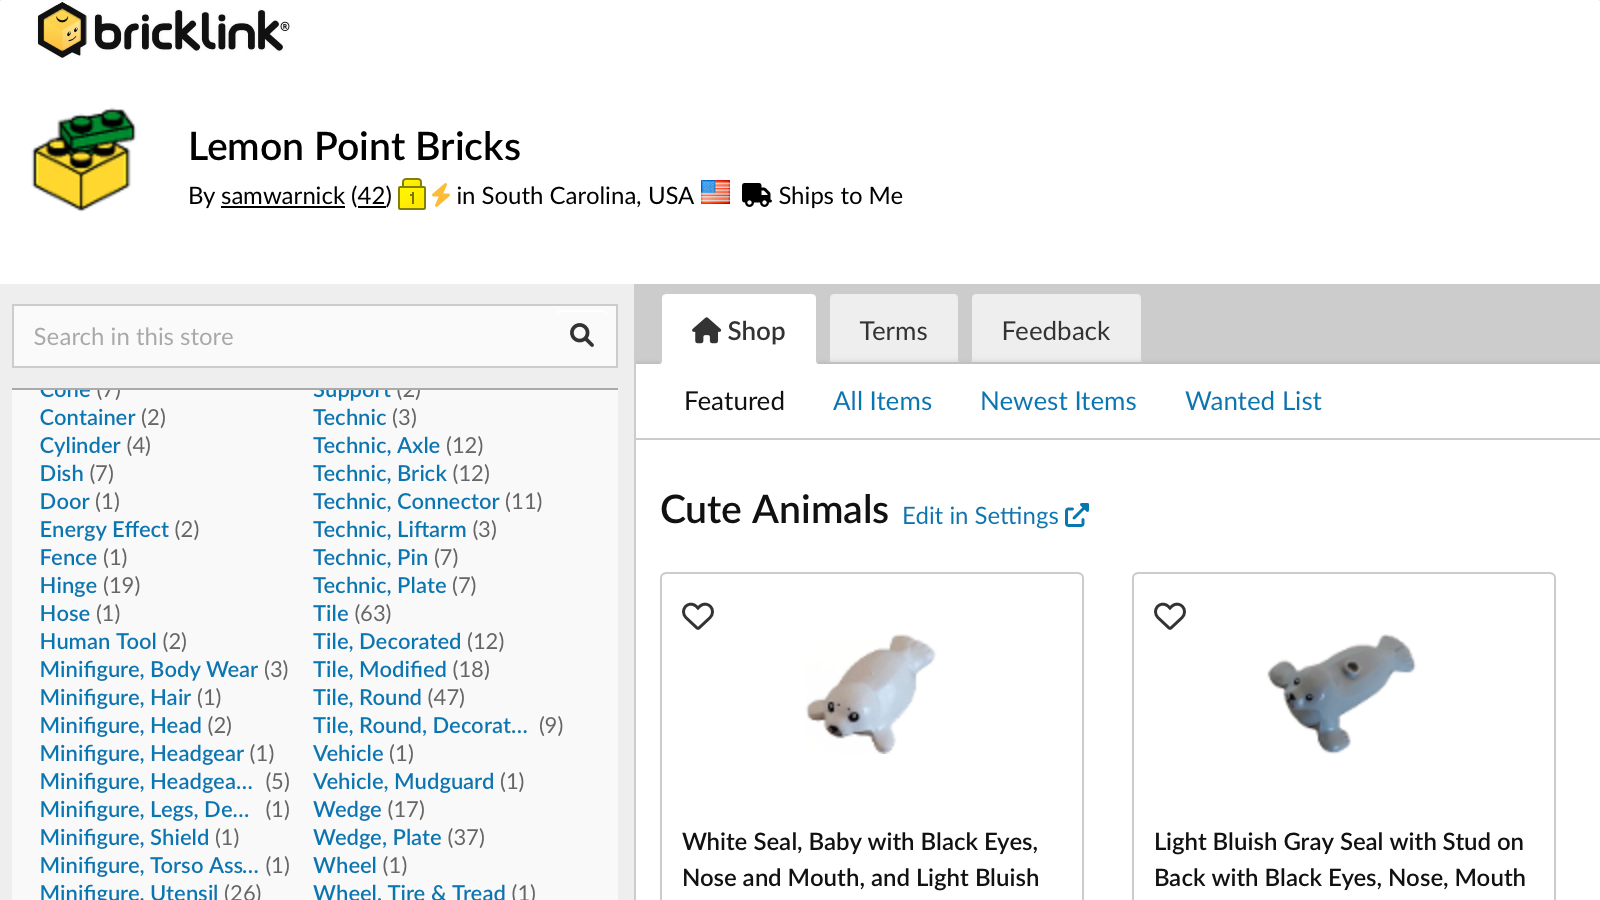 Screen shot of Lemon Point Bricks BrickLink store